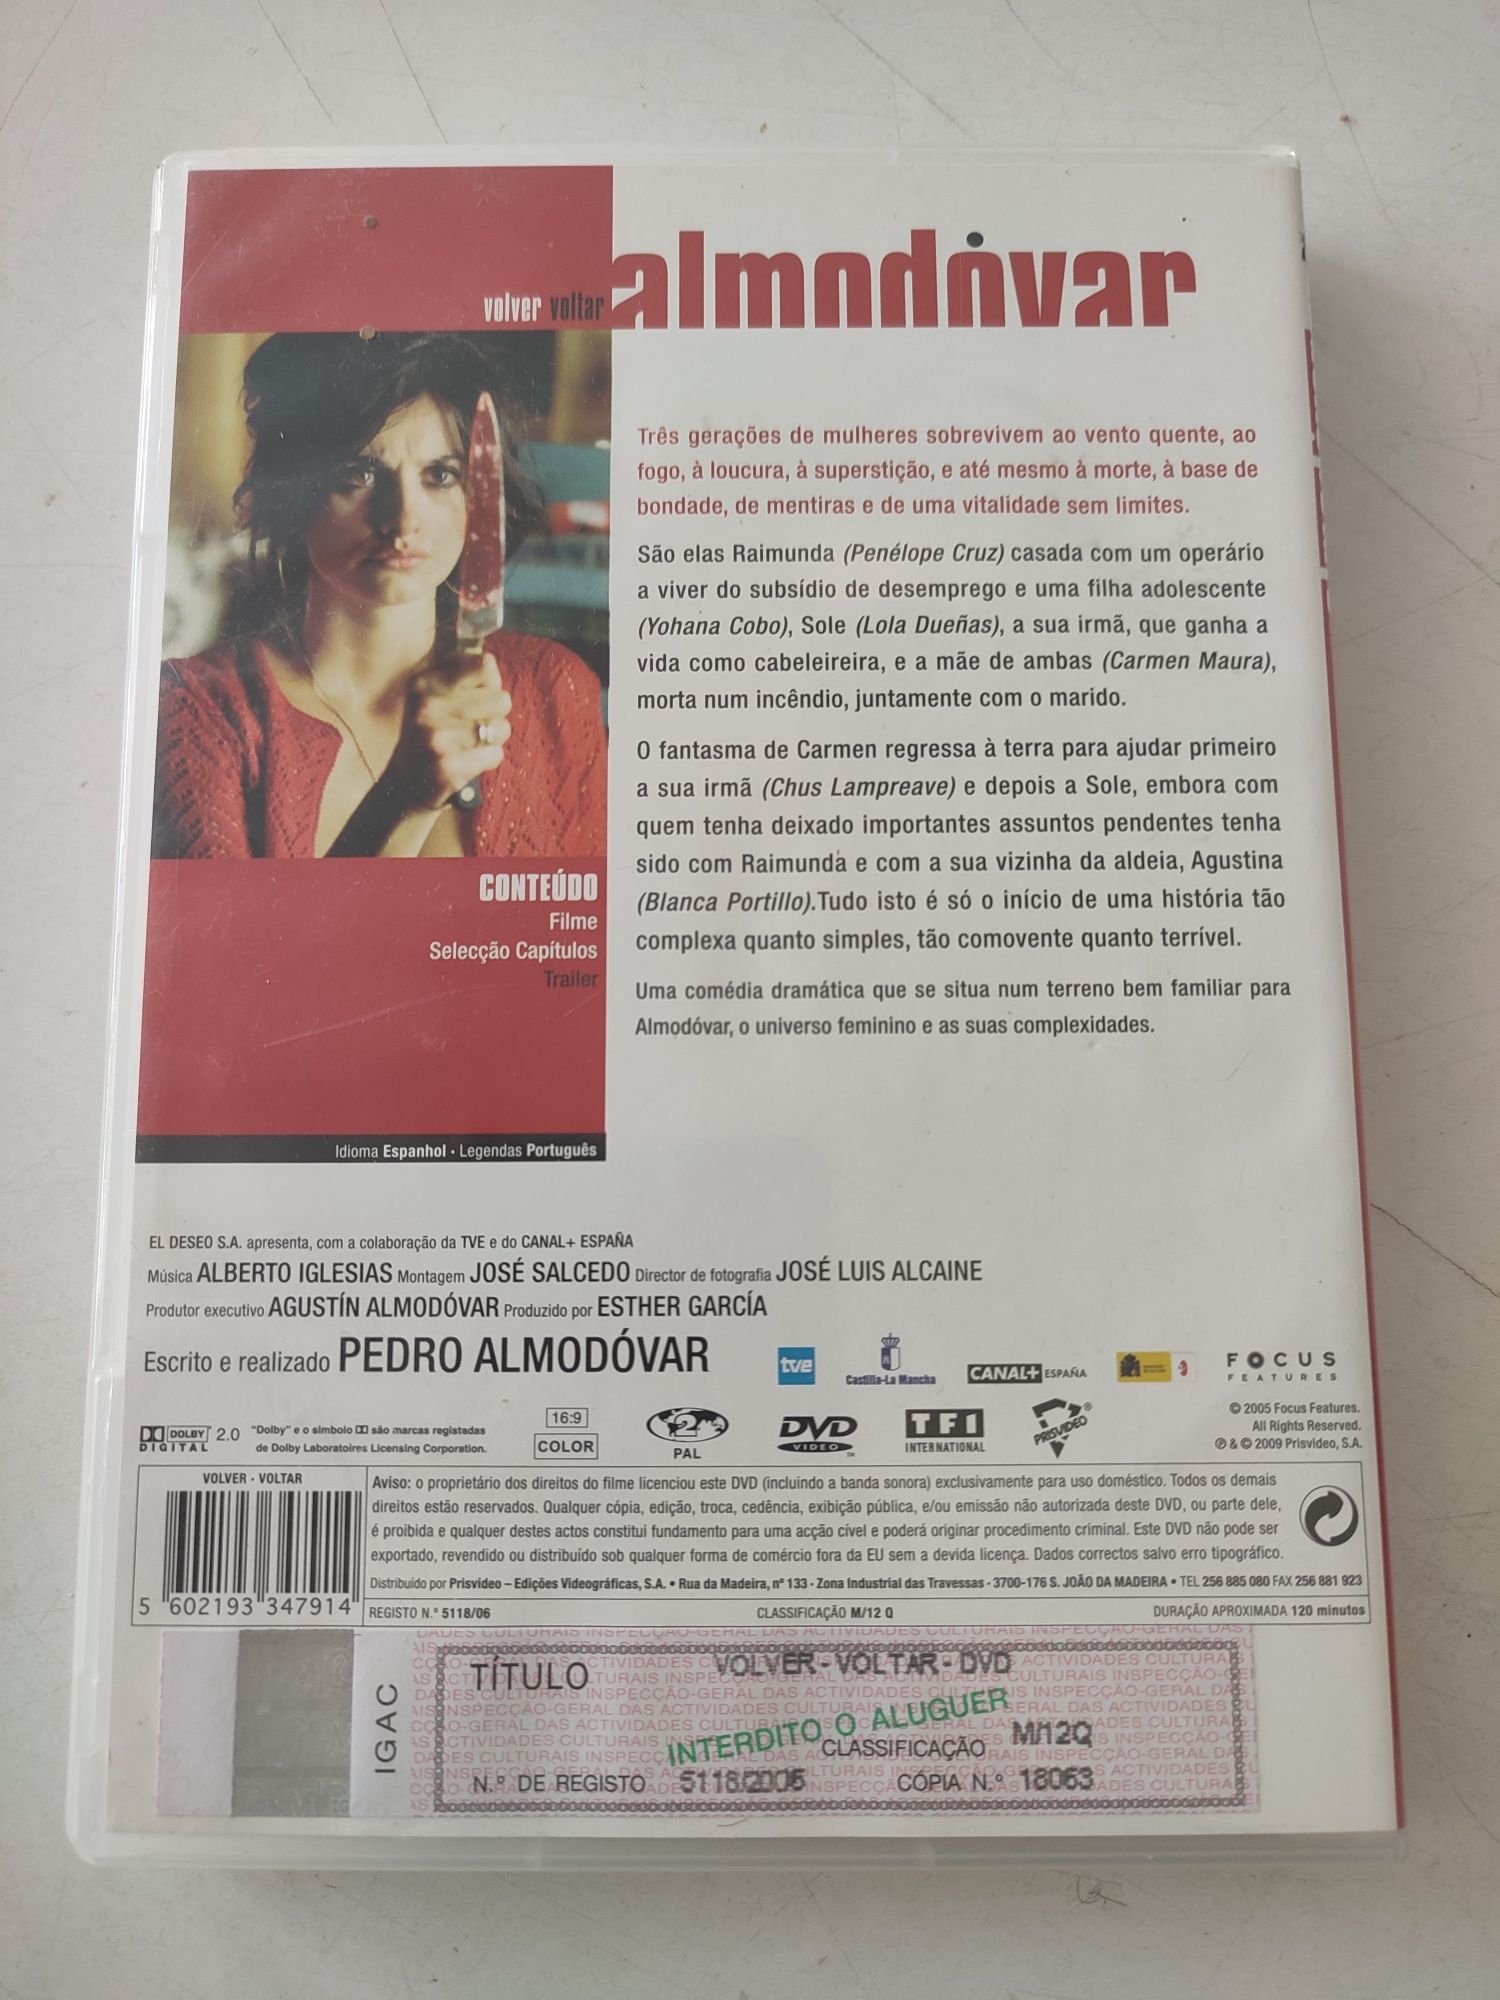 Filme DVD "Volver"